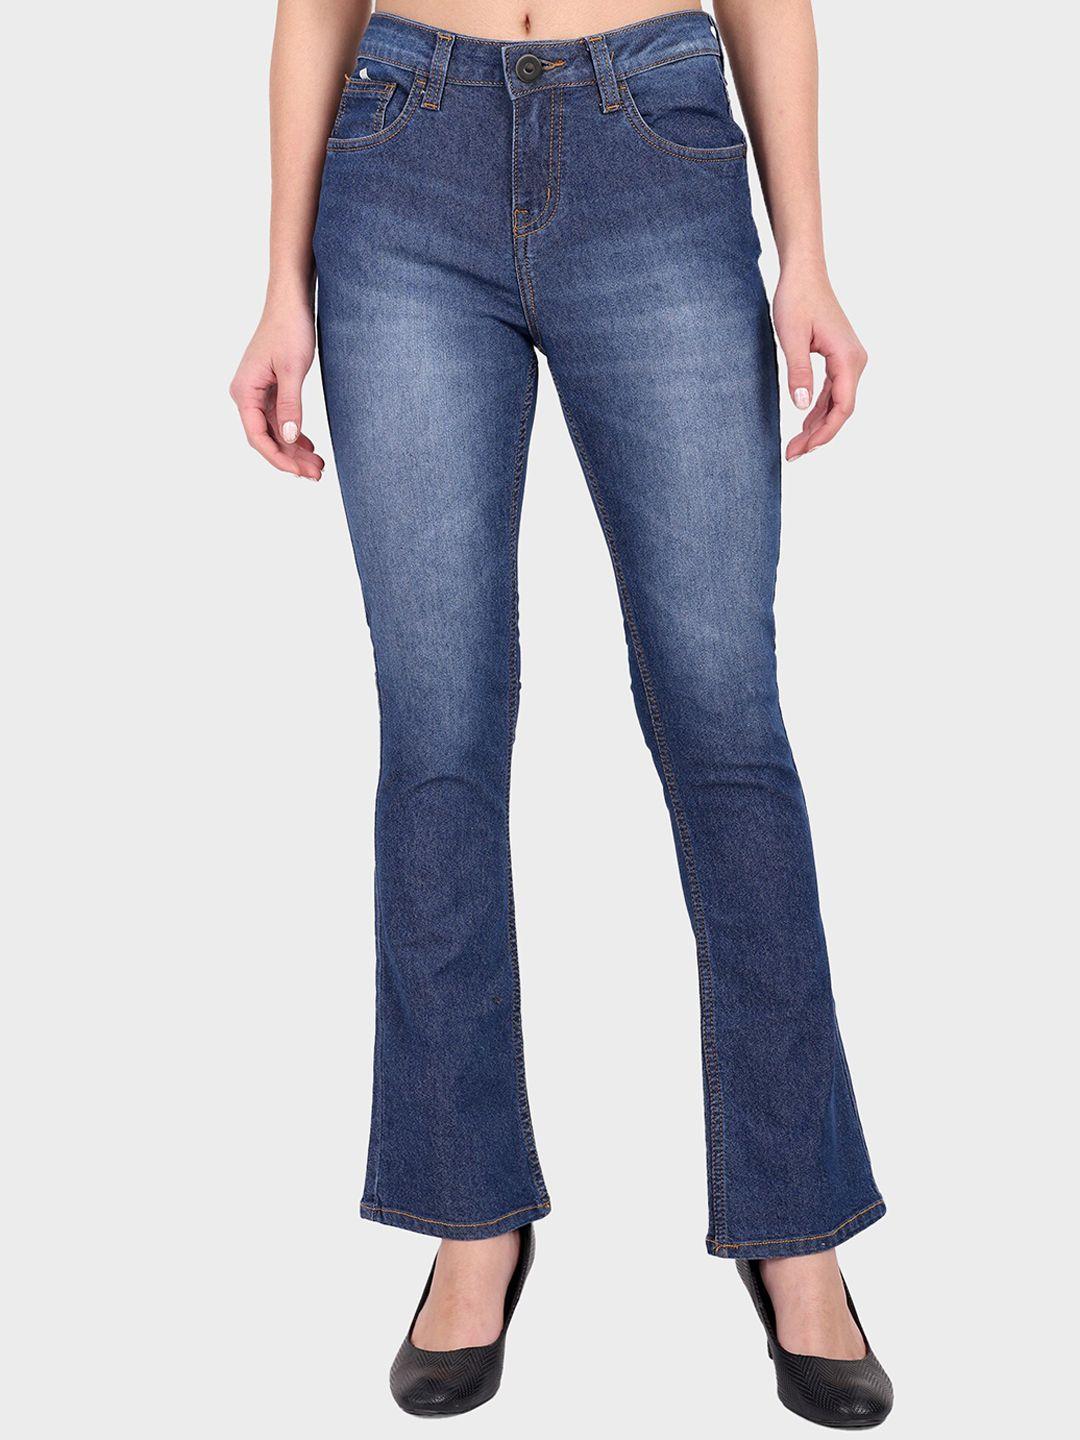 dressberry-women-navy-blue-bootcut-mid-rise-heavy-fade-denim-jeans